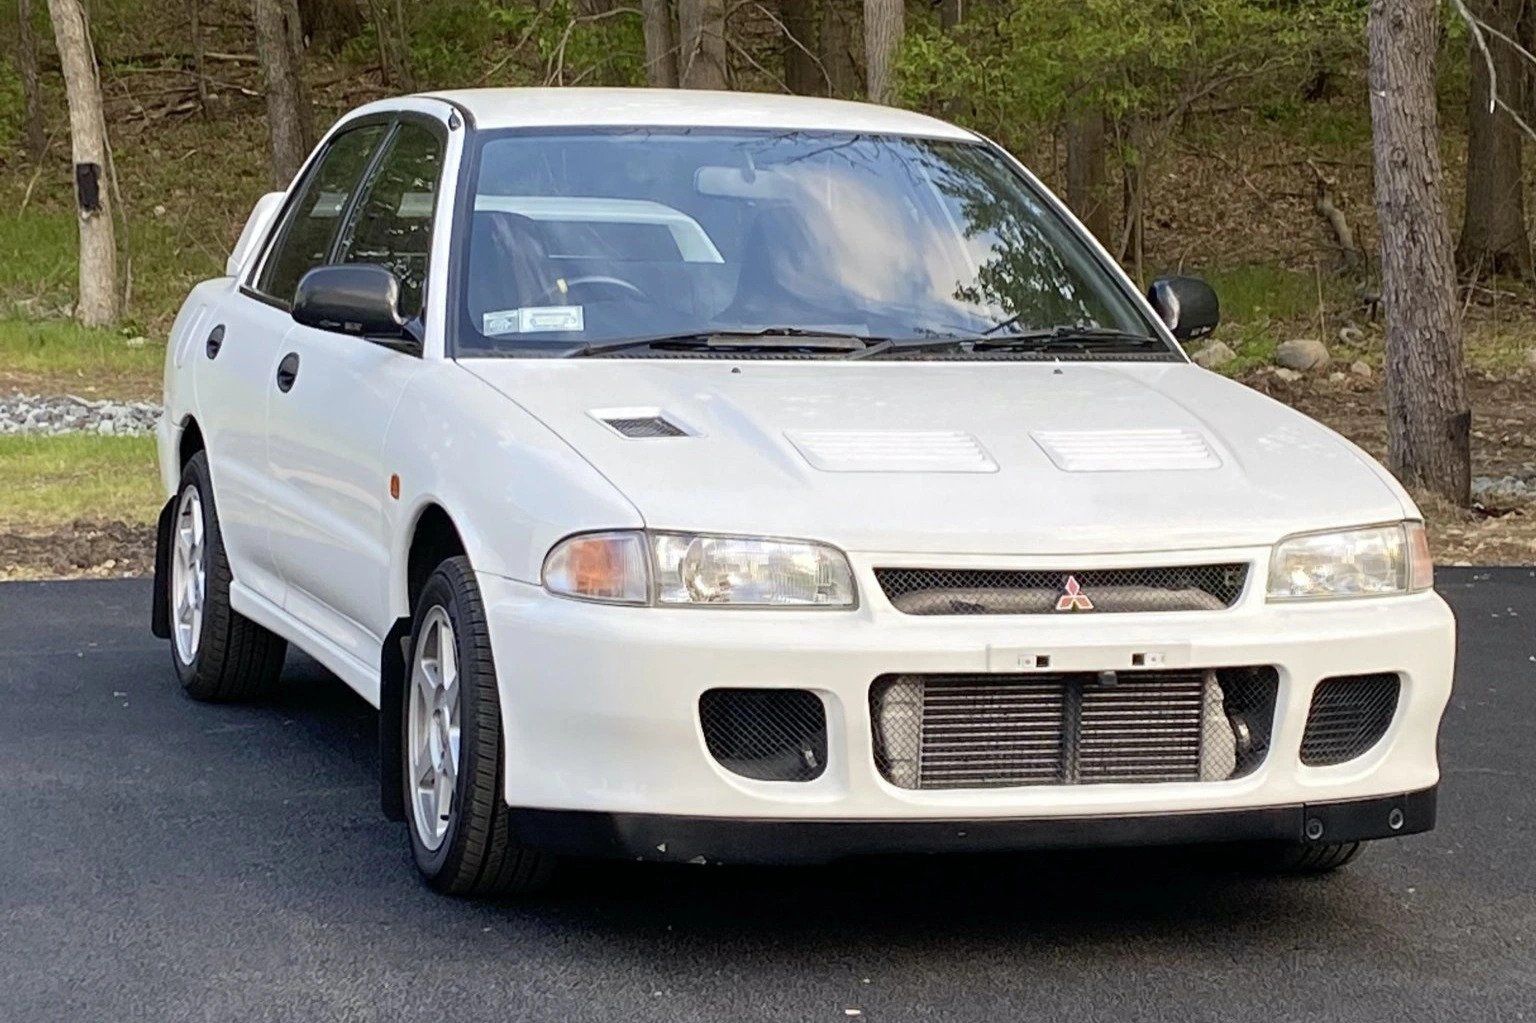 1994 Mitsubishi Lancer Evolution II, White